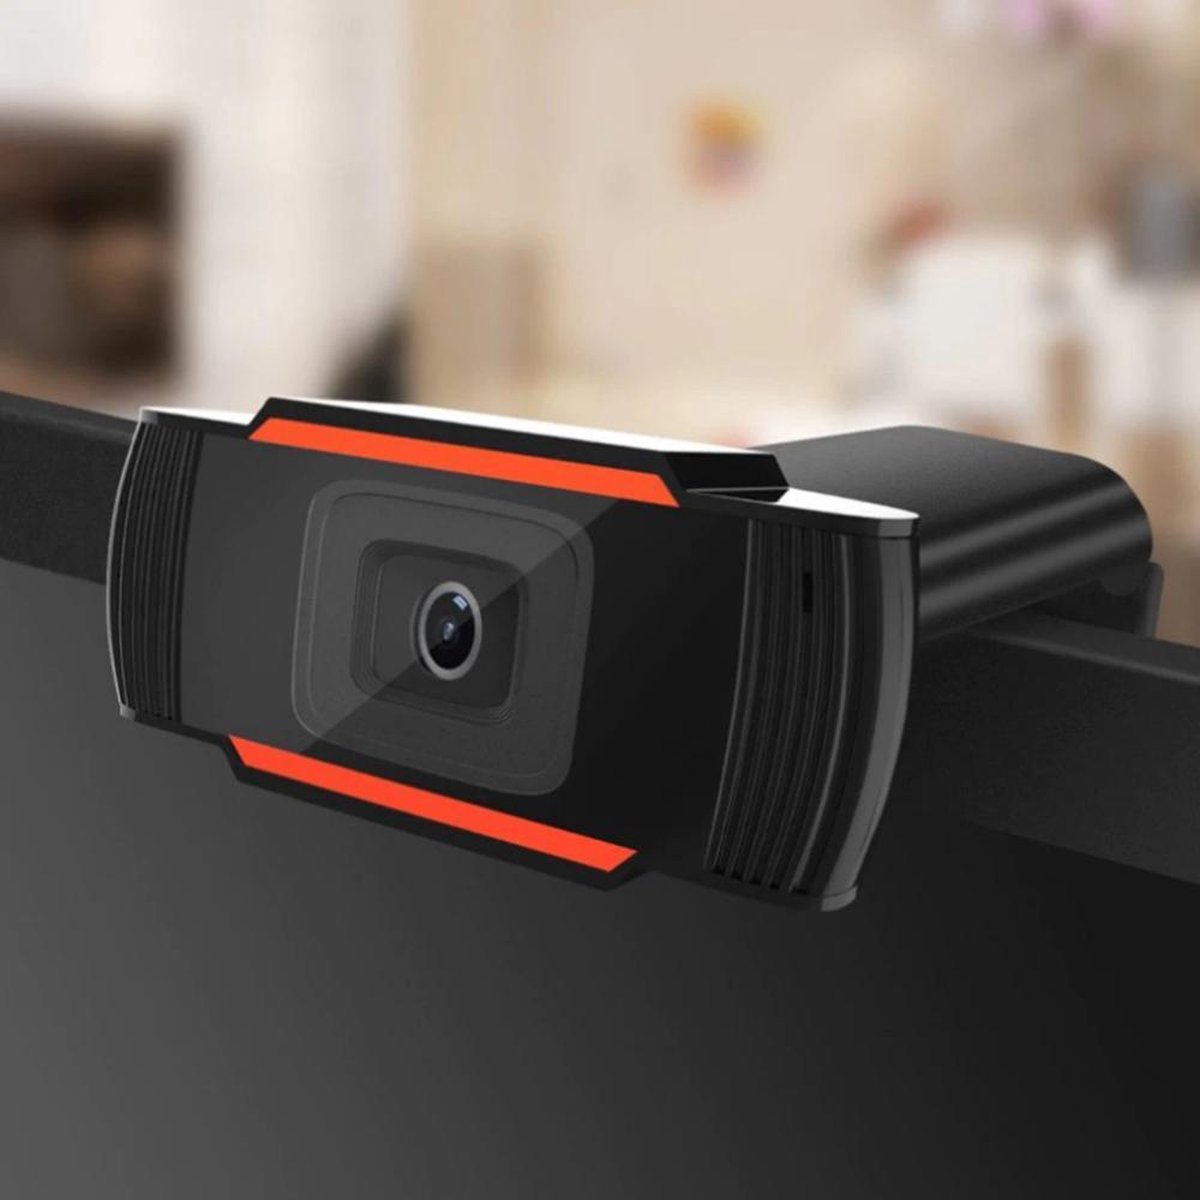 Full HD Webcam - 1080p - Ingebouwde Microfoon - USB - Voor PC en Laptop - Webcams - Zwart - Full HD Resolutie